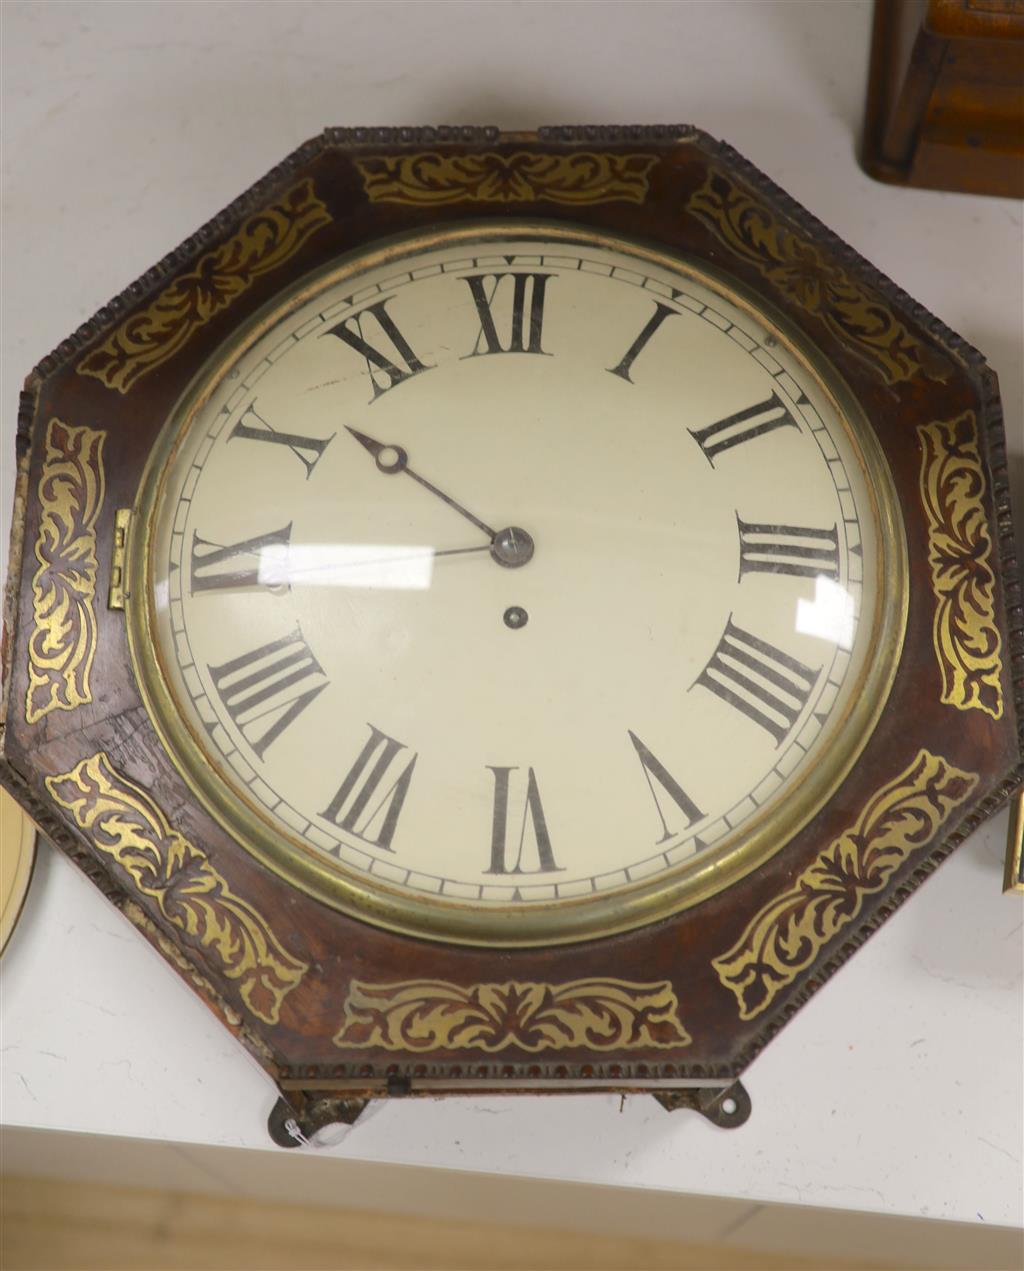 A William IV brass inlaid mahogany wall clock, 42.5cm wide, depth 13cm, single fusee movement